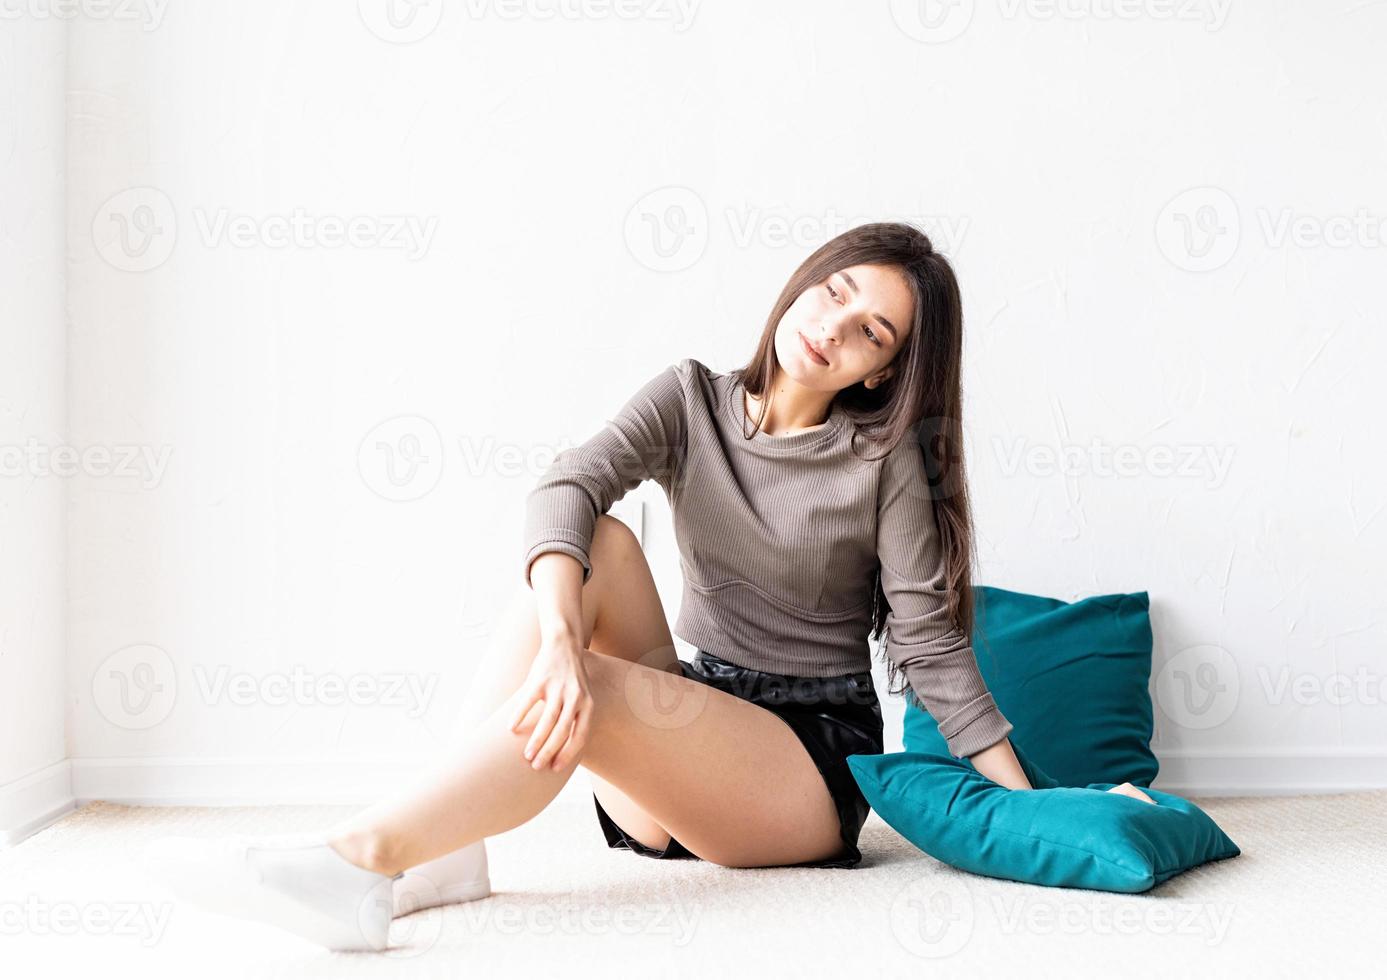 vrouw in vrijetijdskleding zittend op de vloer met kussens glimlachend foto